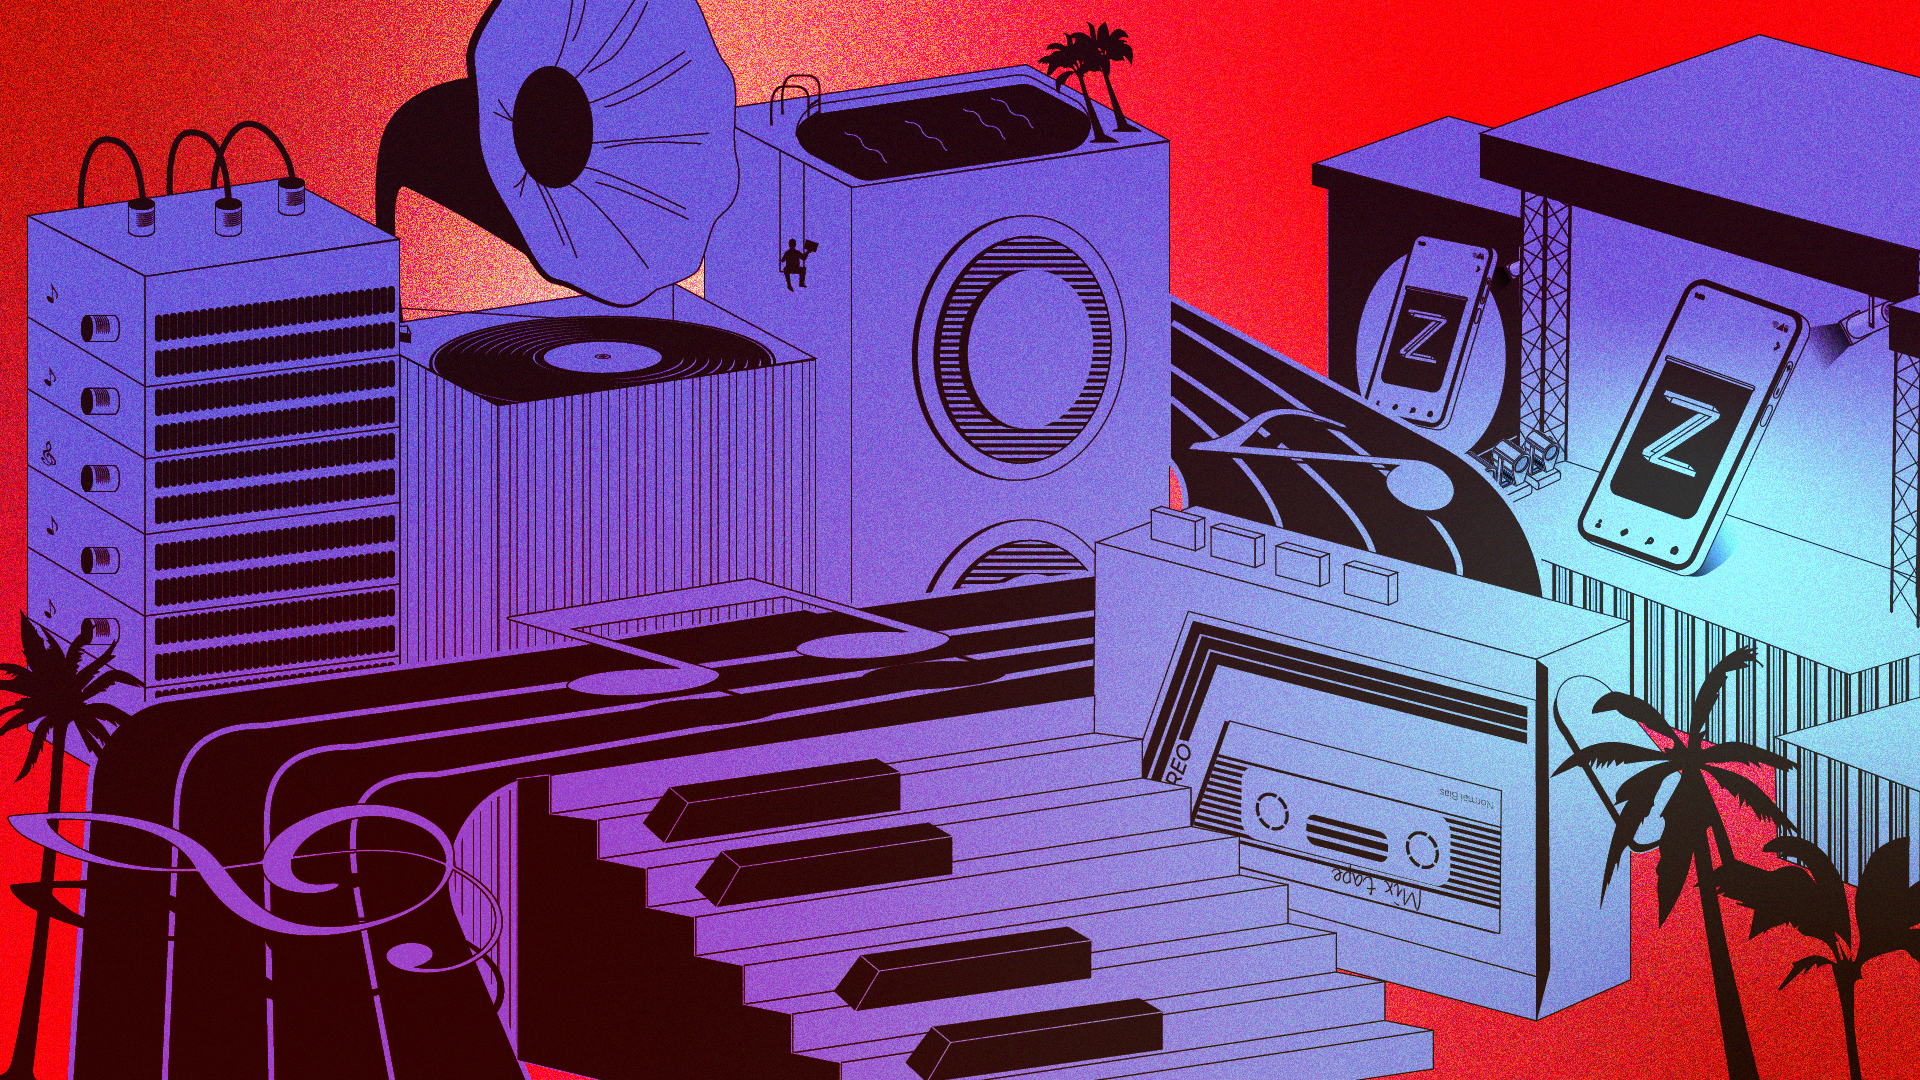 Evolution of Alt Z Music: Soundtrack of SoundCloud and the Digital Age